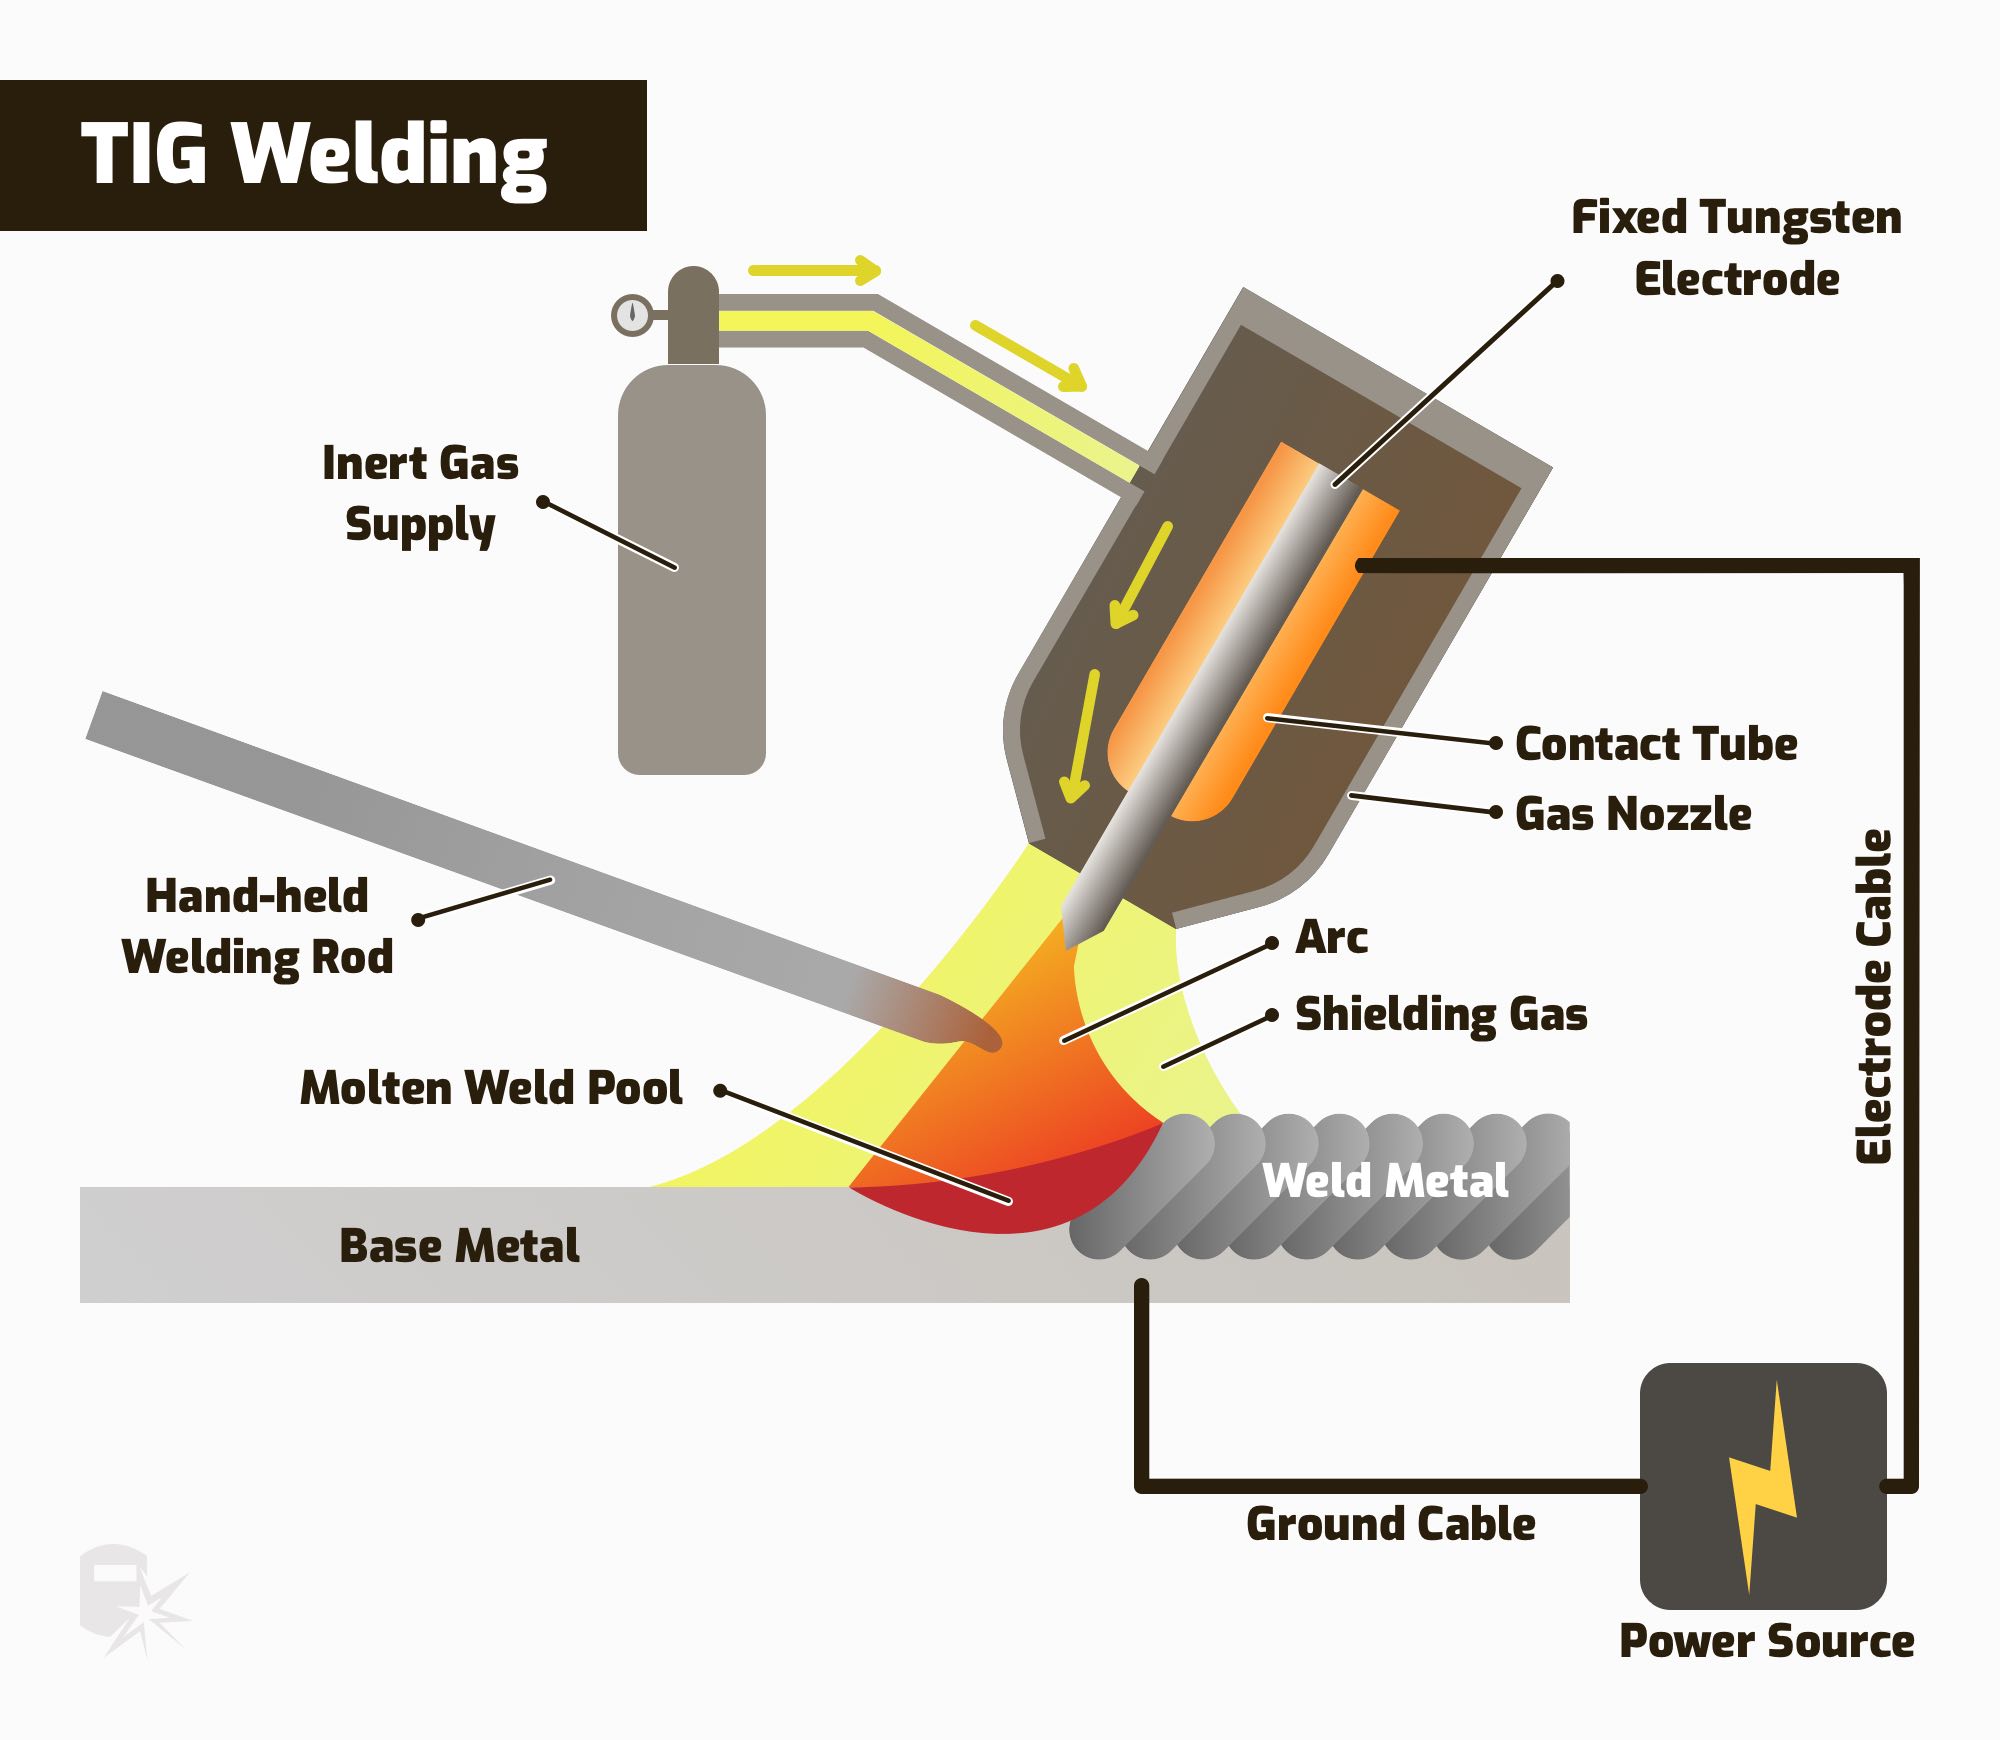 What is a tig welder?